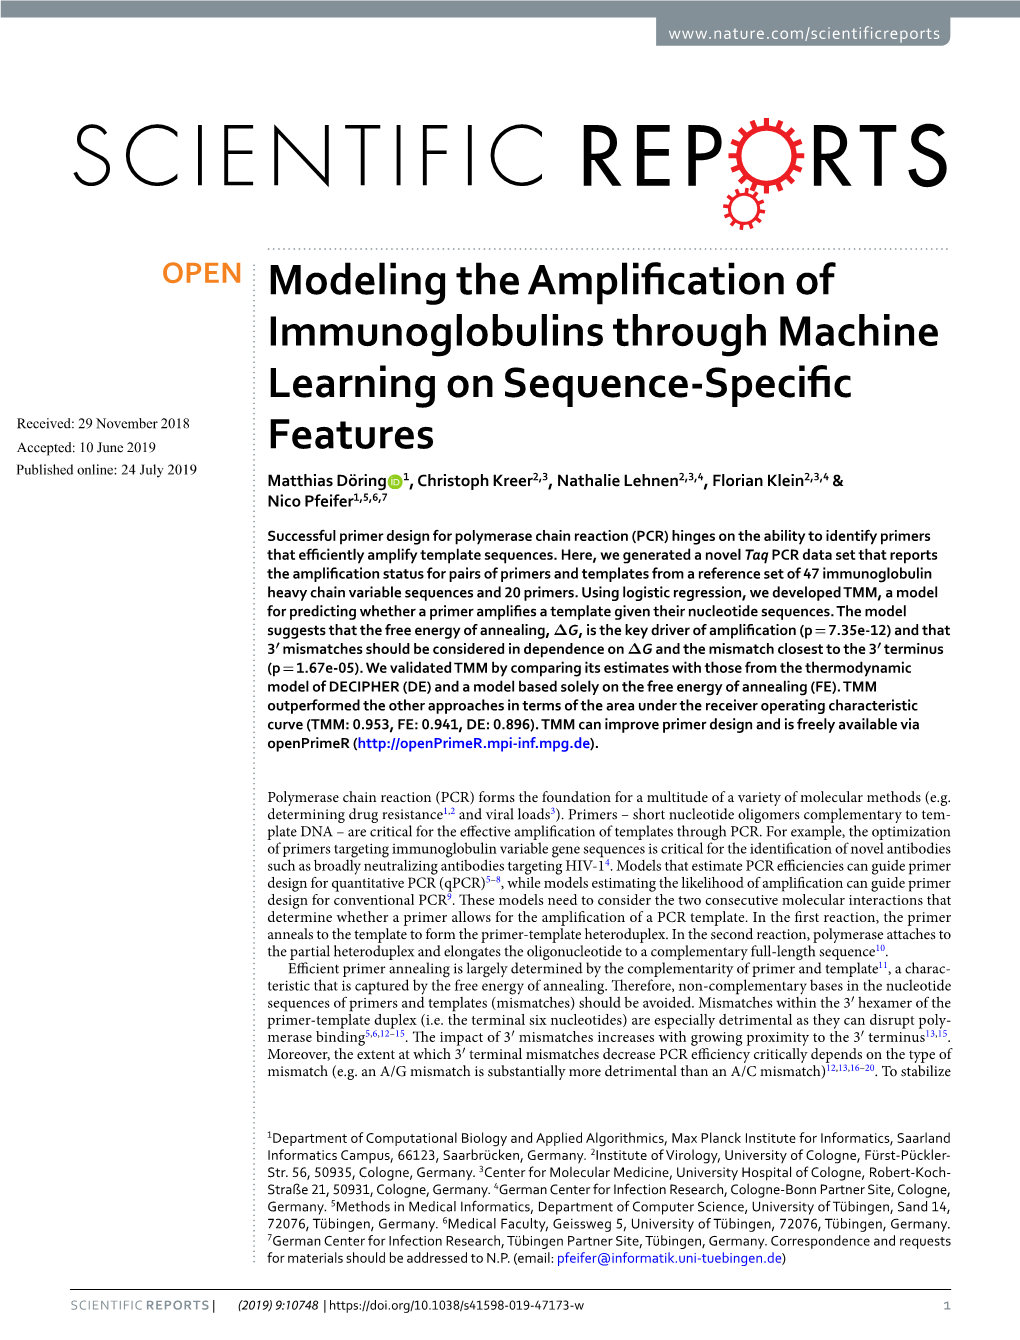 Modeling the Amplification of Immunoglobulins Through Machine